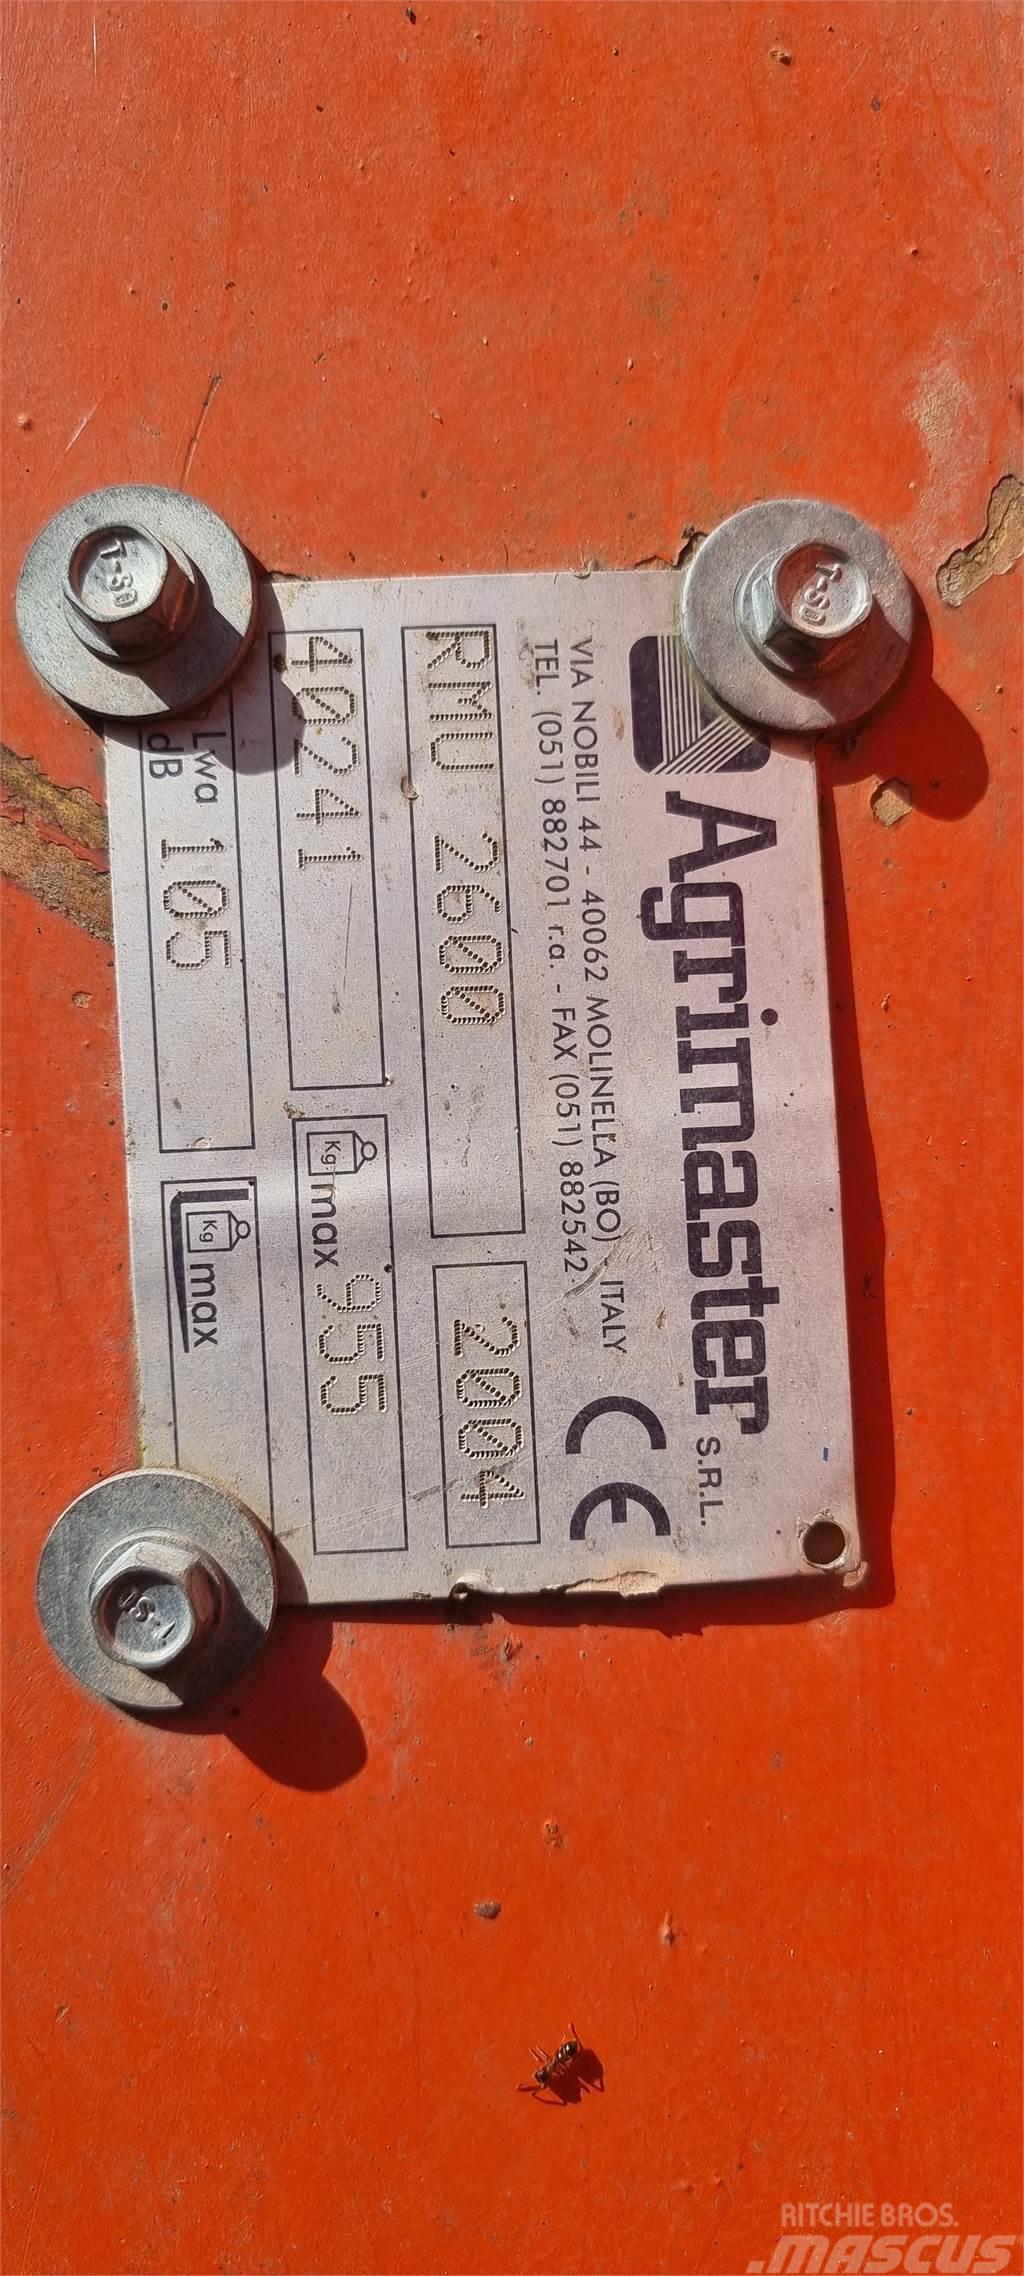 Agrimaster TRINCIASTOCCHI RMU 260 Diger parçalar